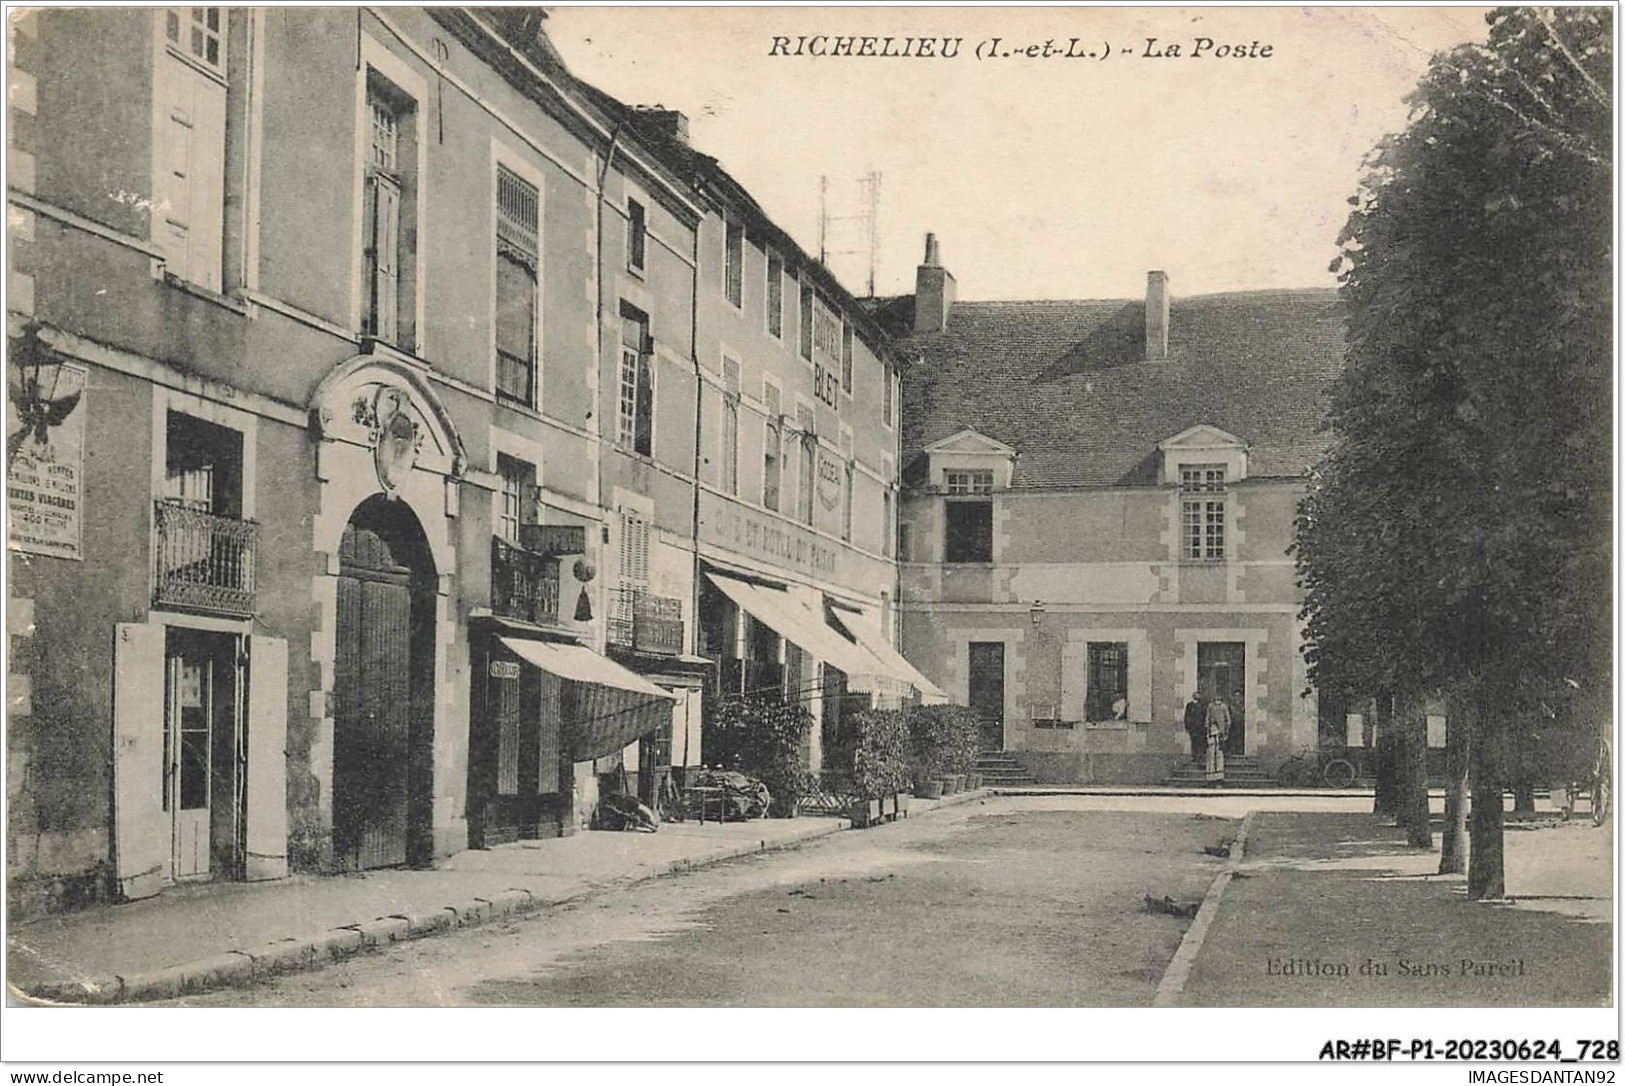 AR#BFP1-37-0365 - RICHELLIEU - La Poste - La Riche